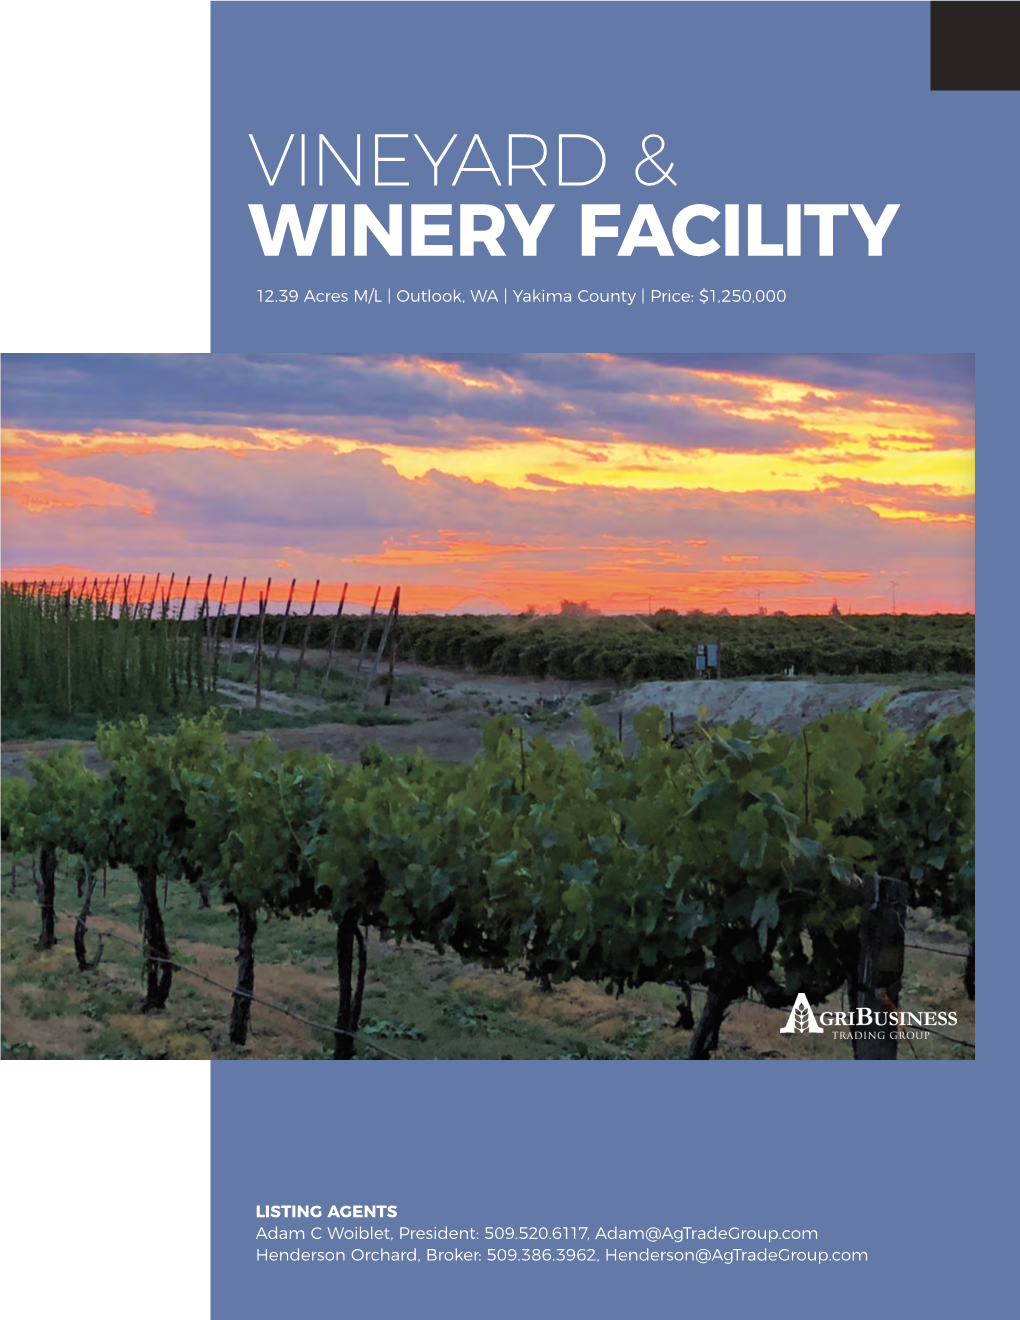 Vineyard & Winery Facility